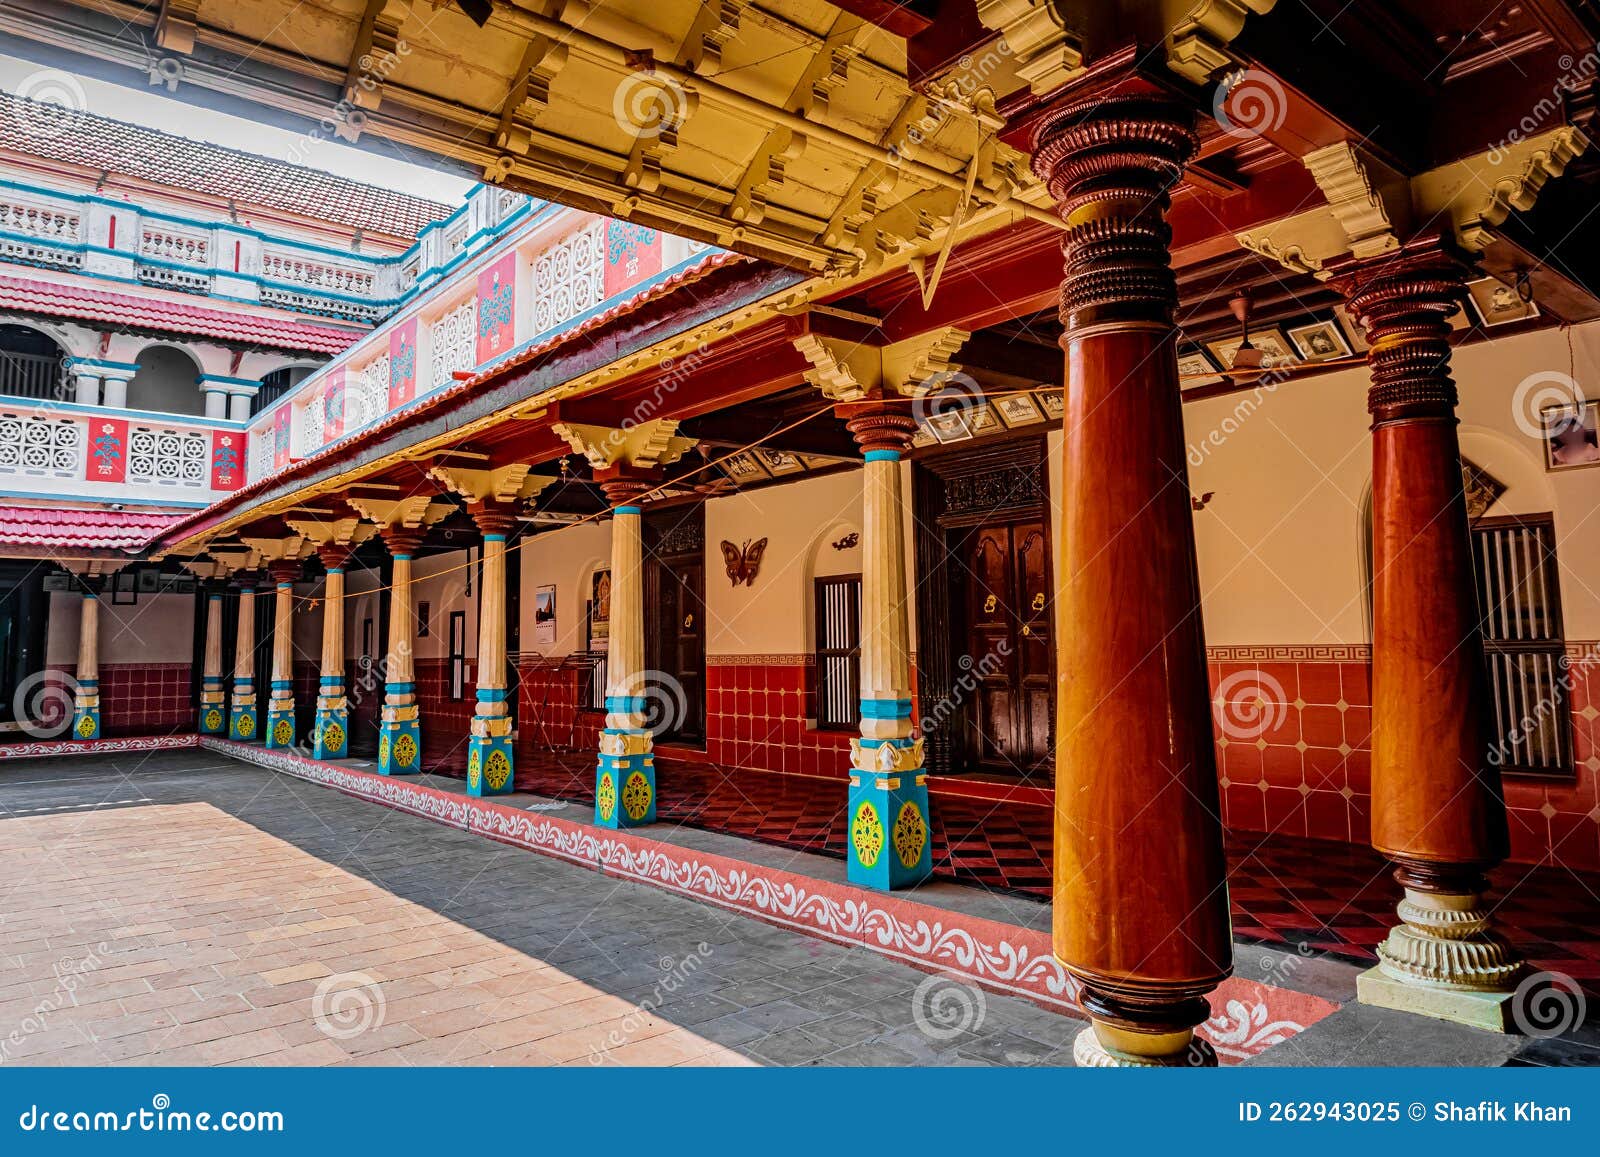 chettinadu style heritage homes in karaikudi, pallathur, athangudi & kothamangalam are the most lavish & exquisite architectural b